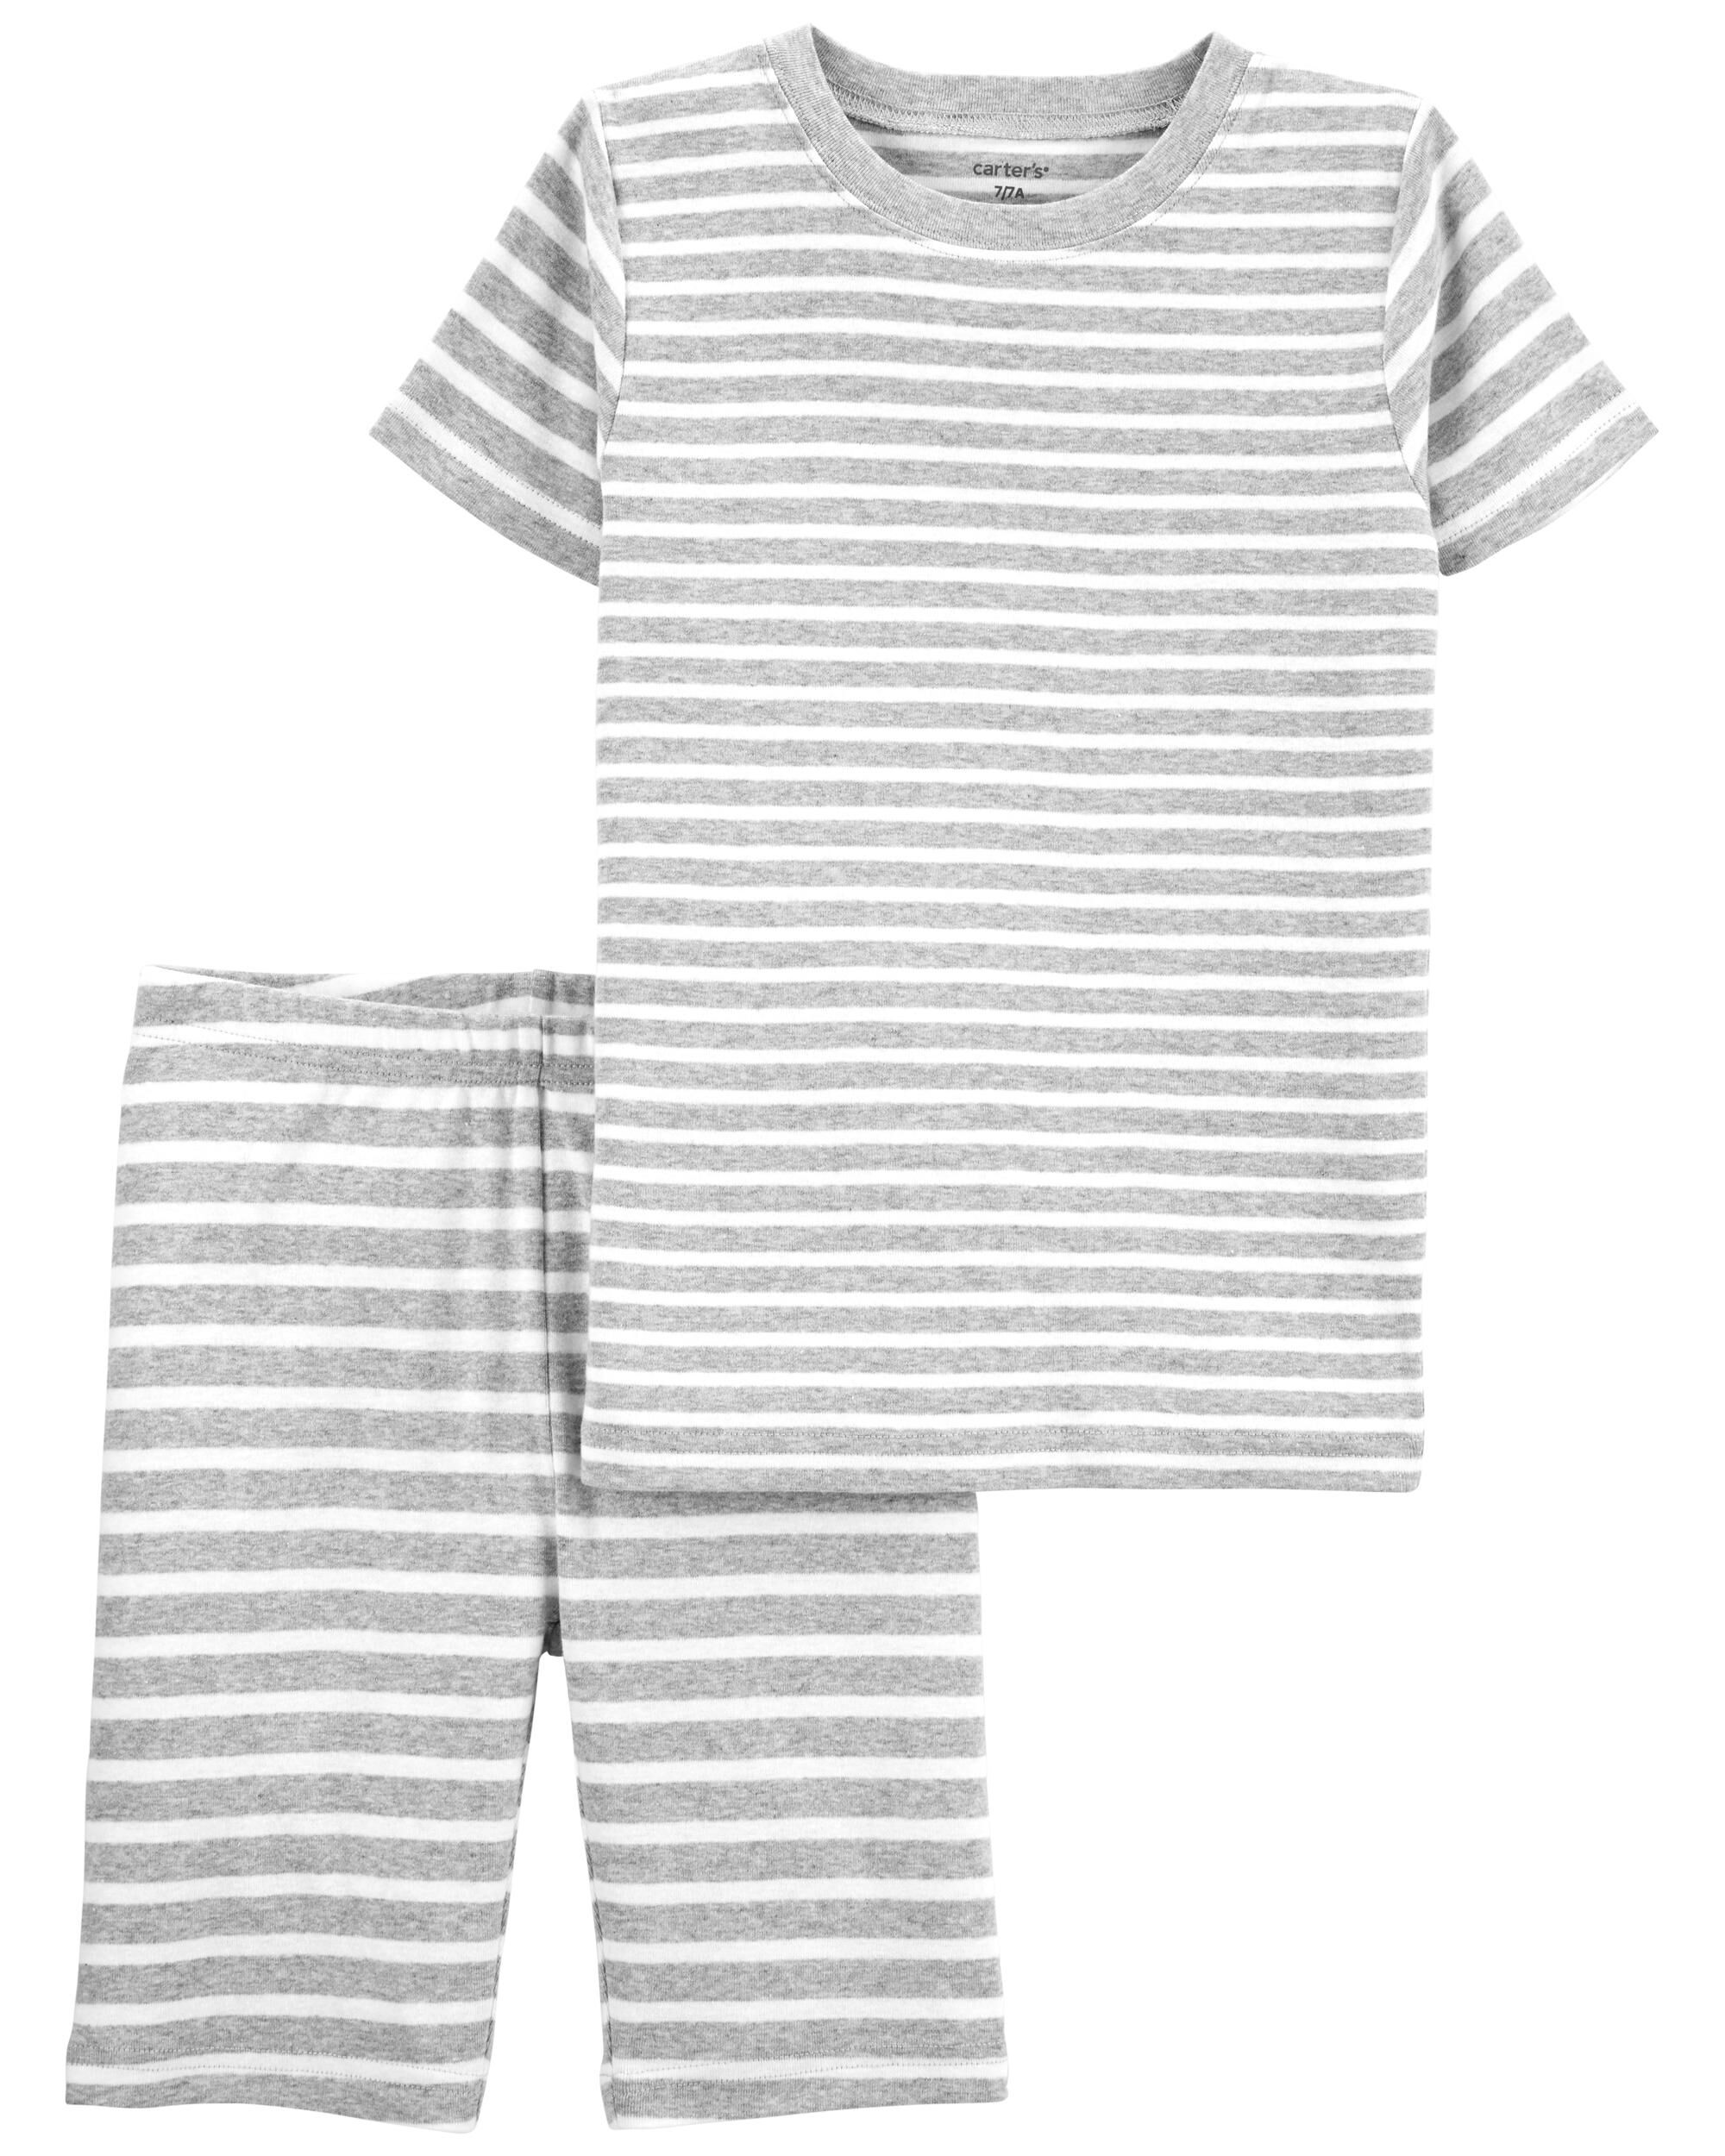 Carters Kid 2-Piece Striped 100% Snug Fit Cotton PJs